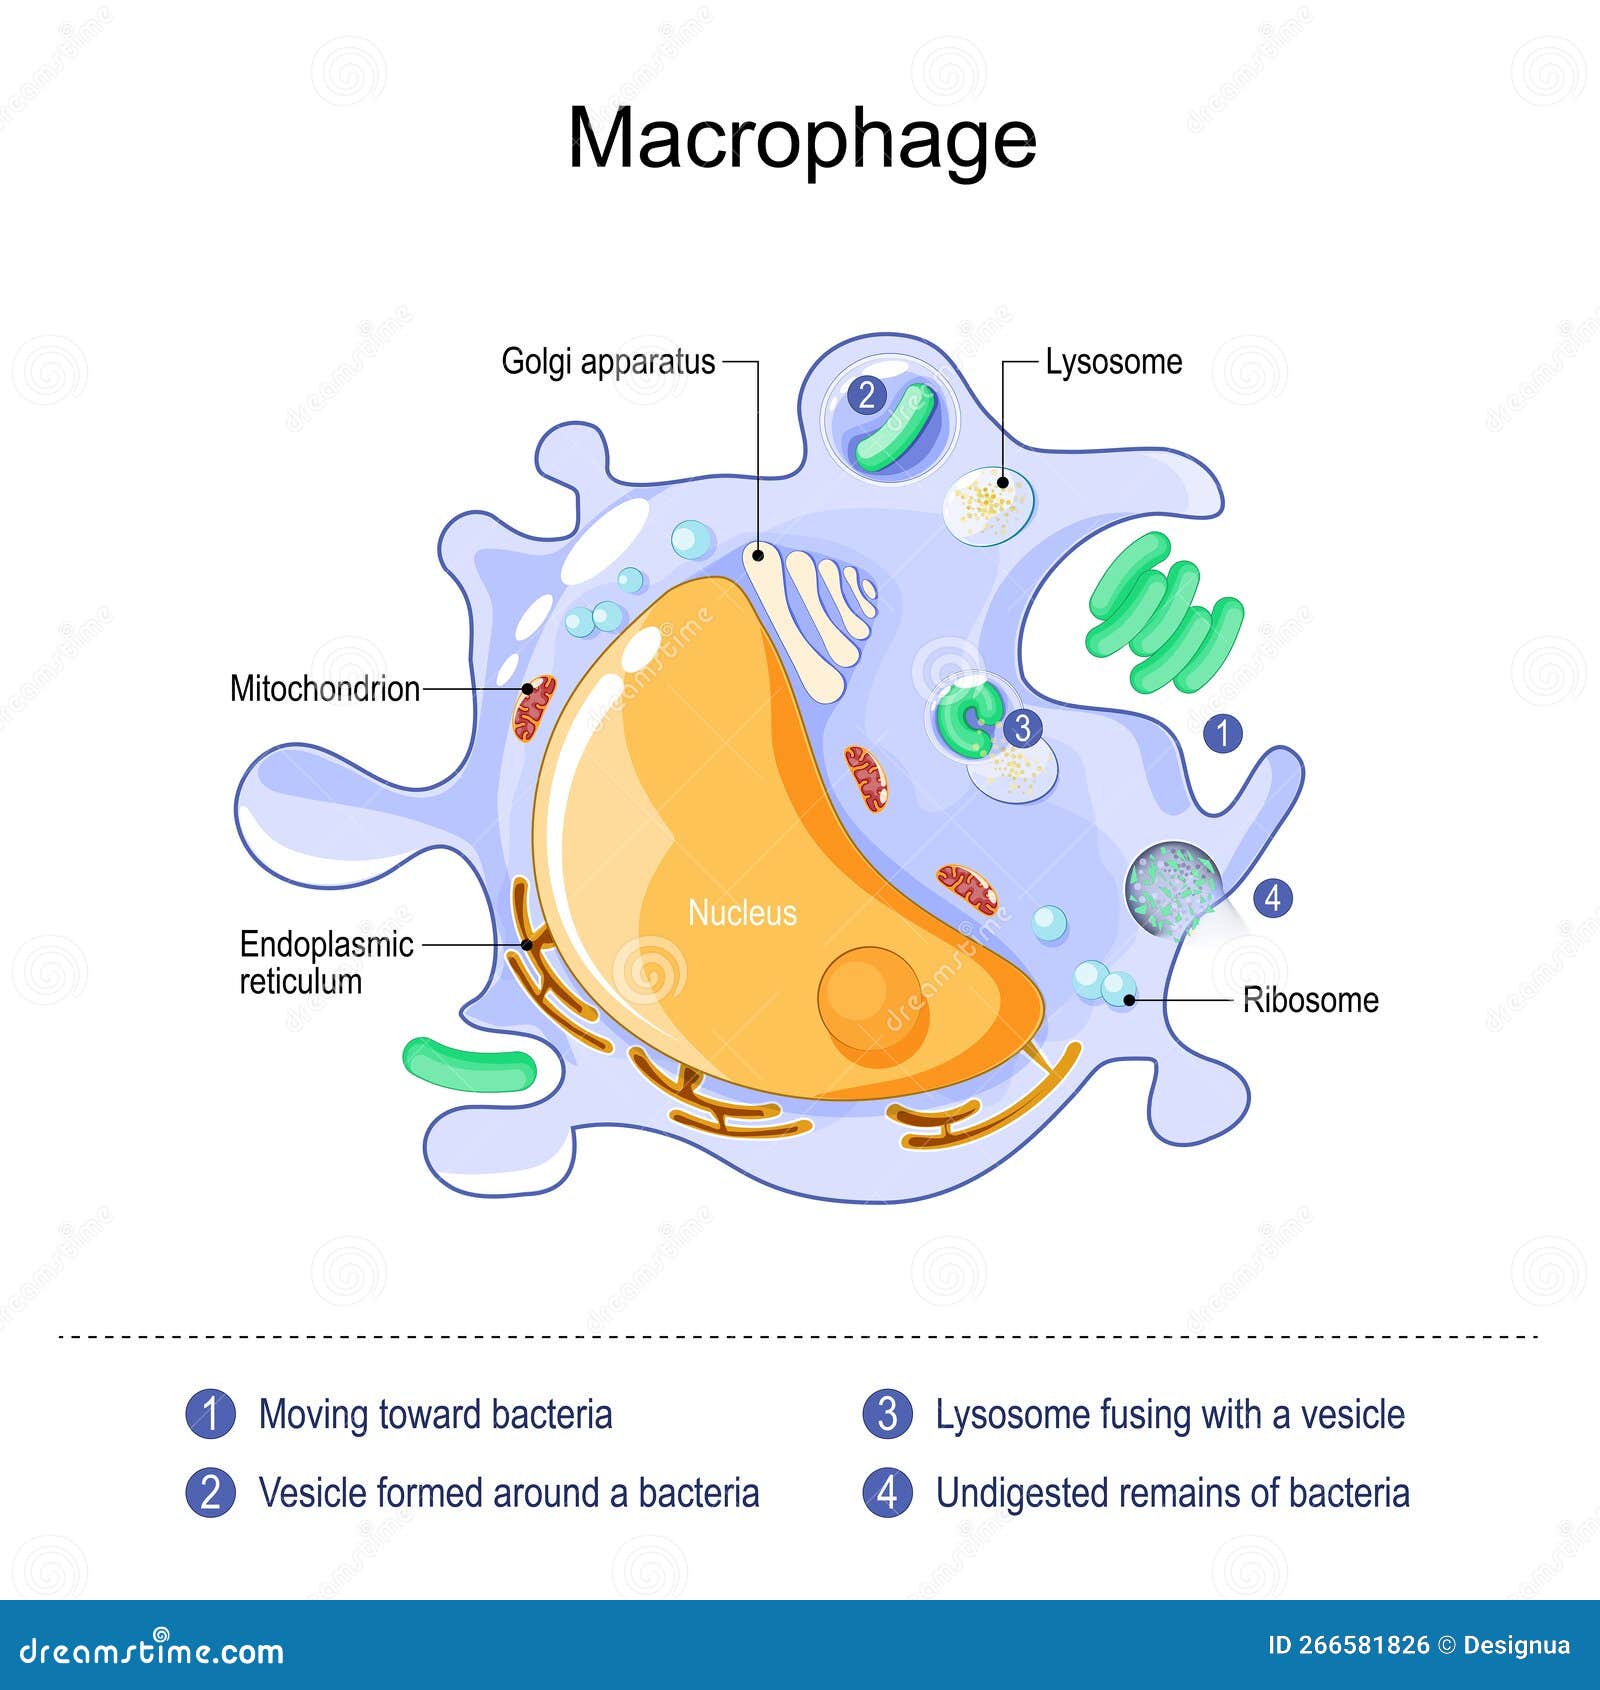 Macrophage Diagram